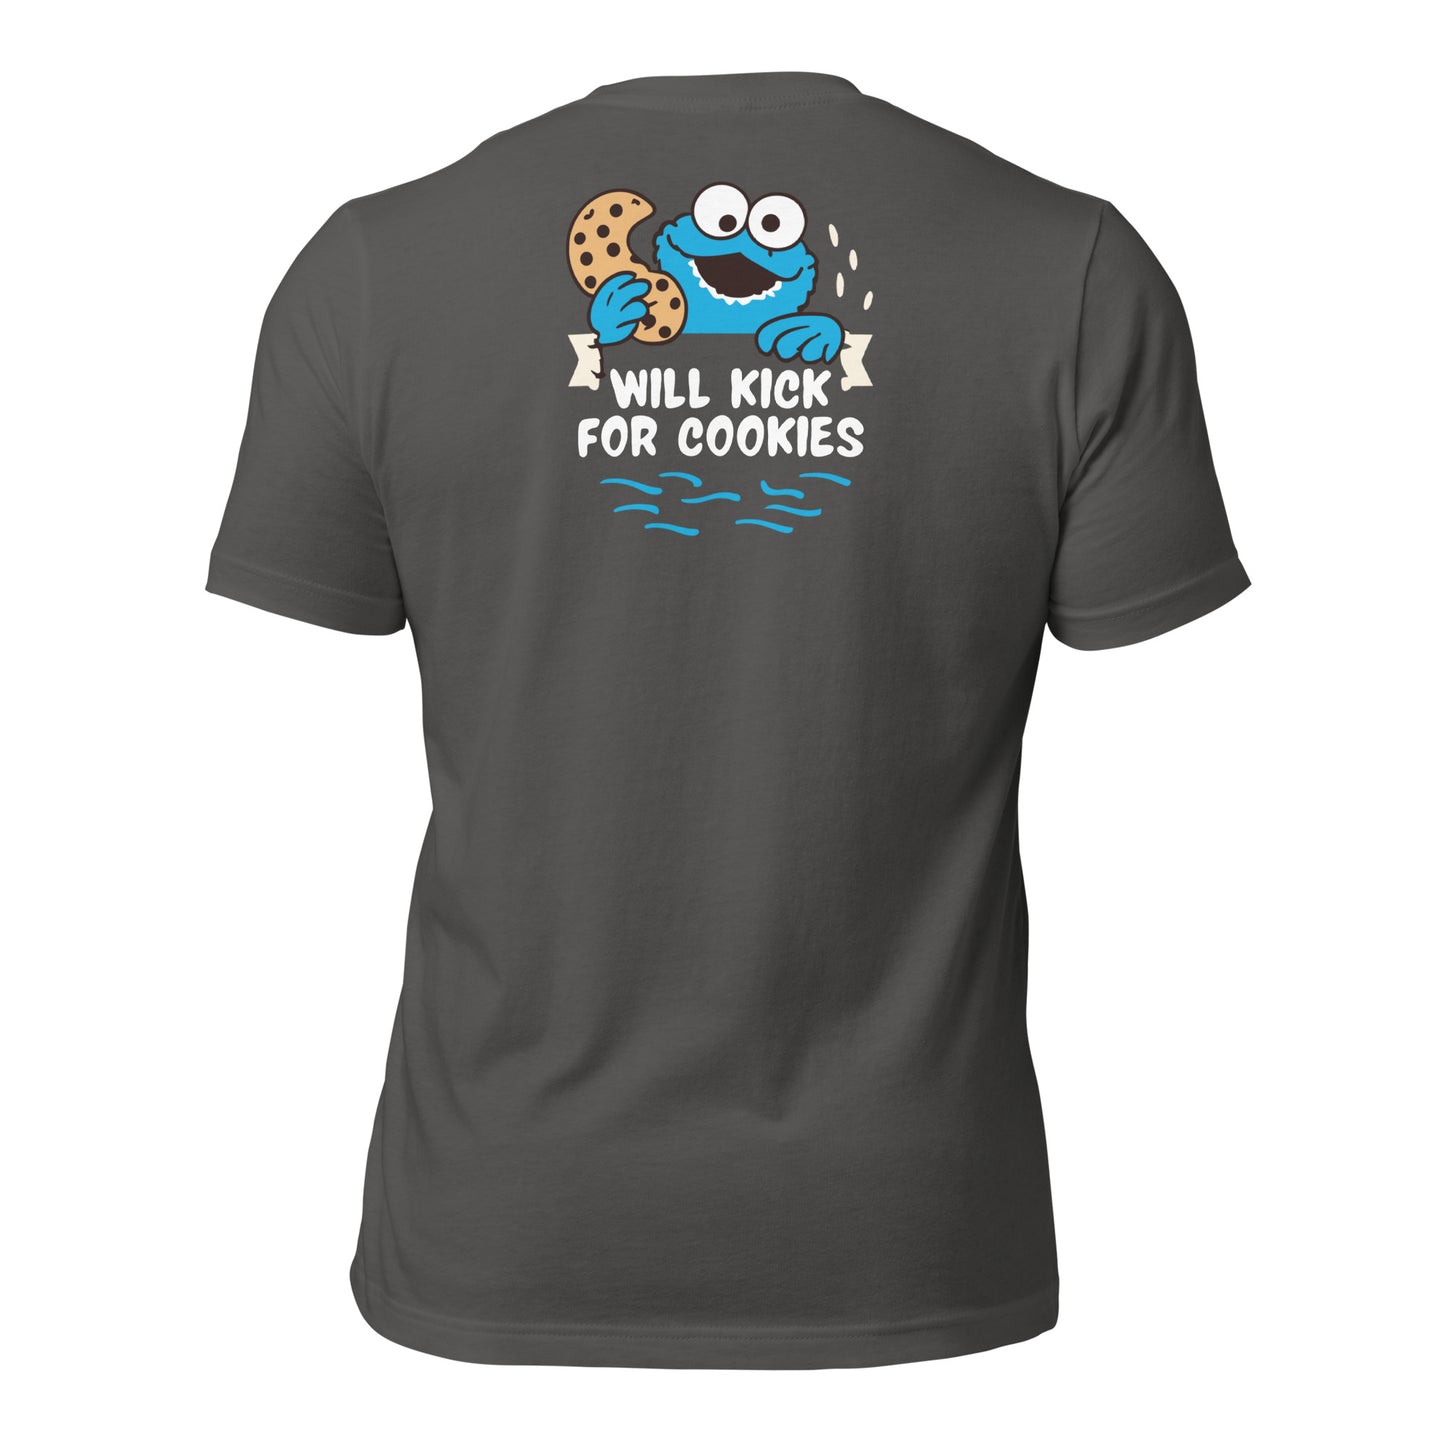 Cookie Monster Swim Tee #3